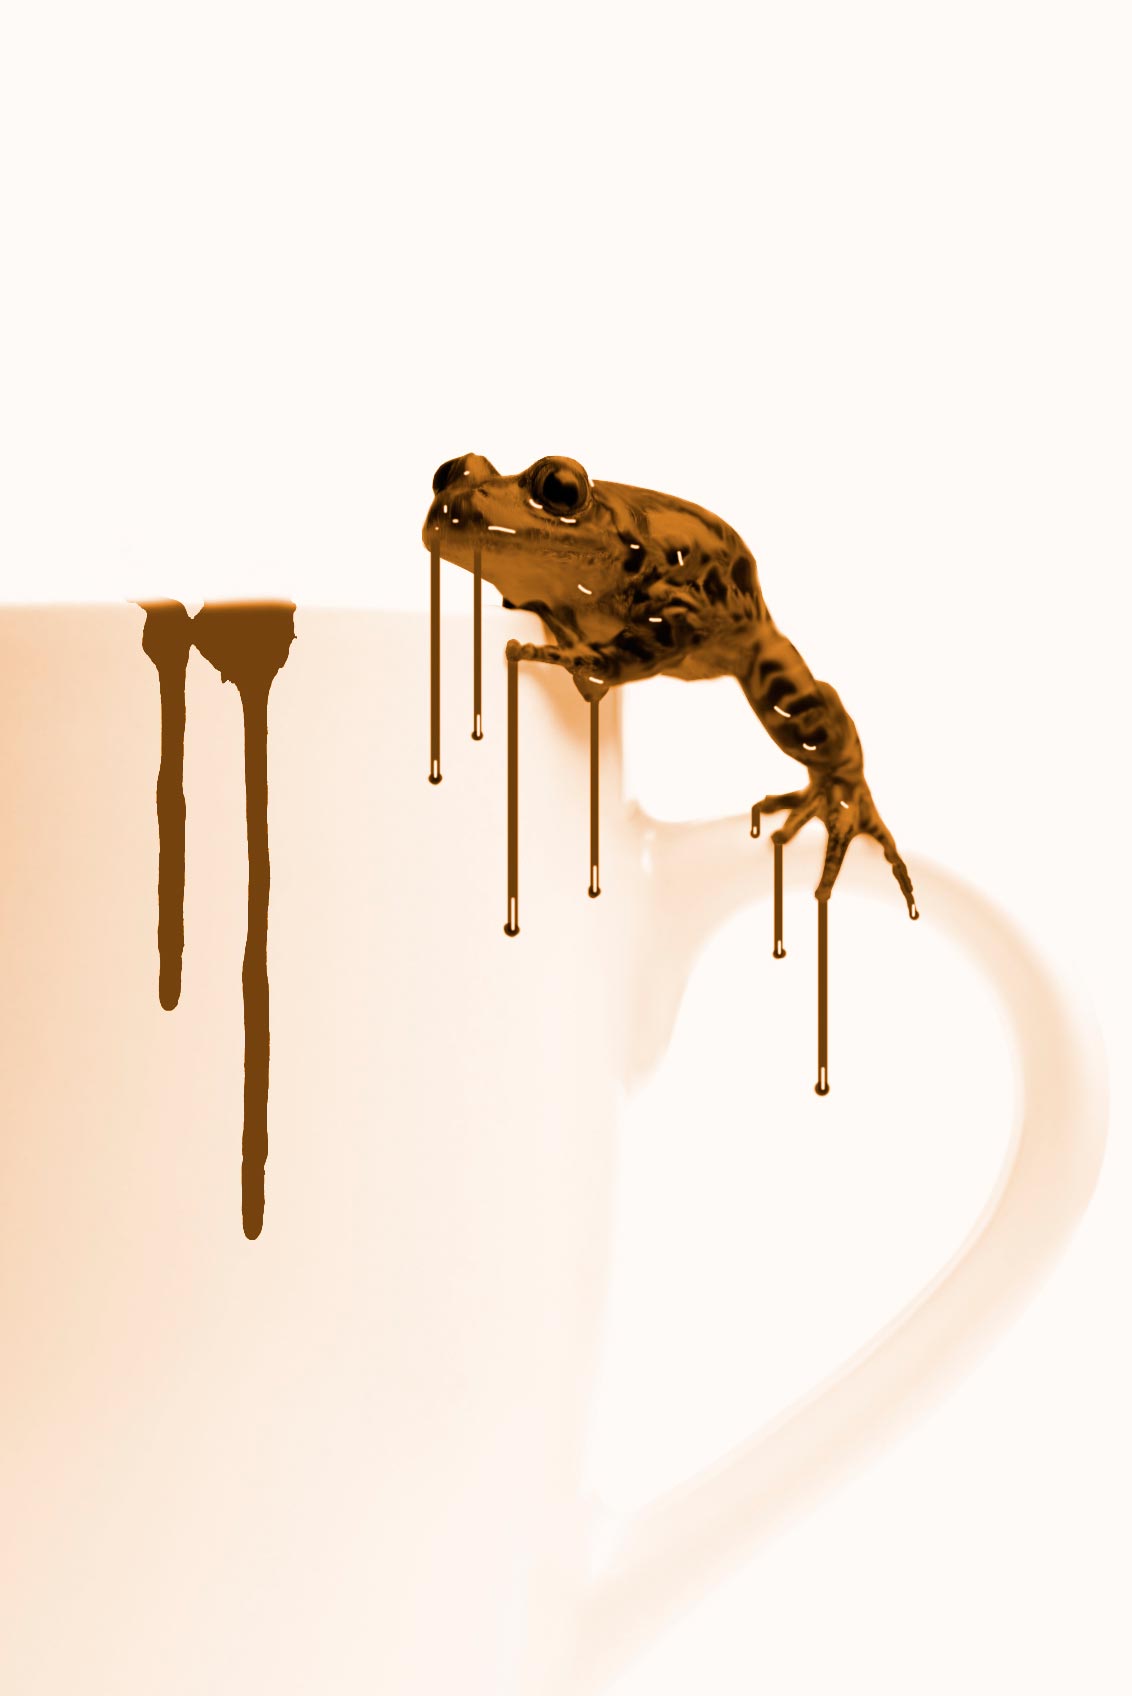 Photoshop Chocolate Milk Frog